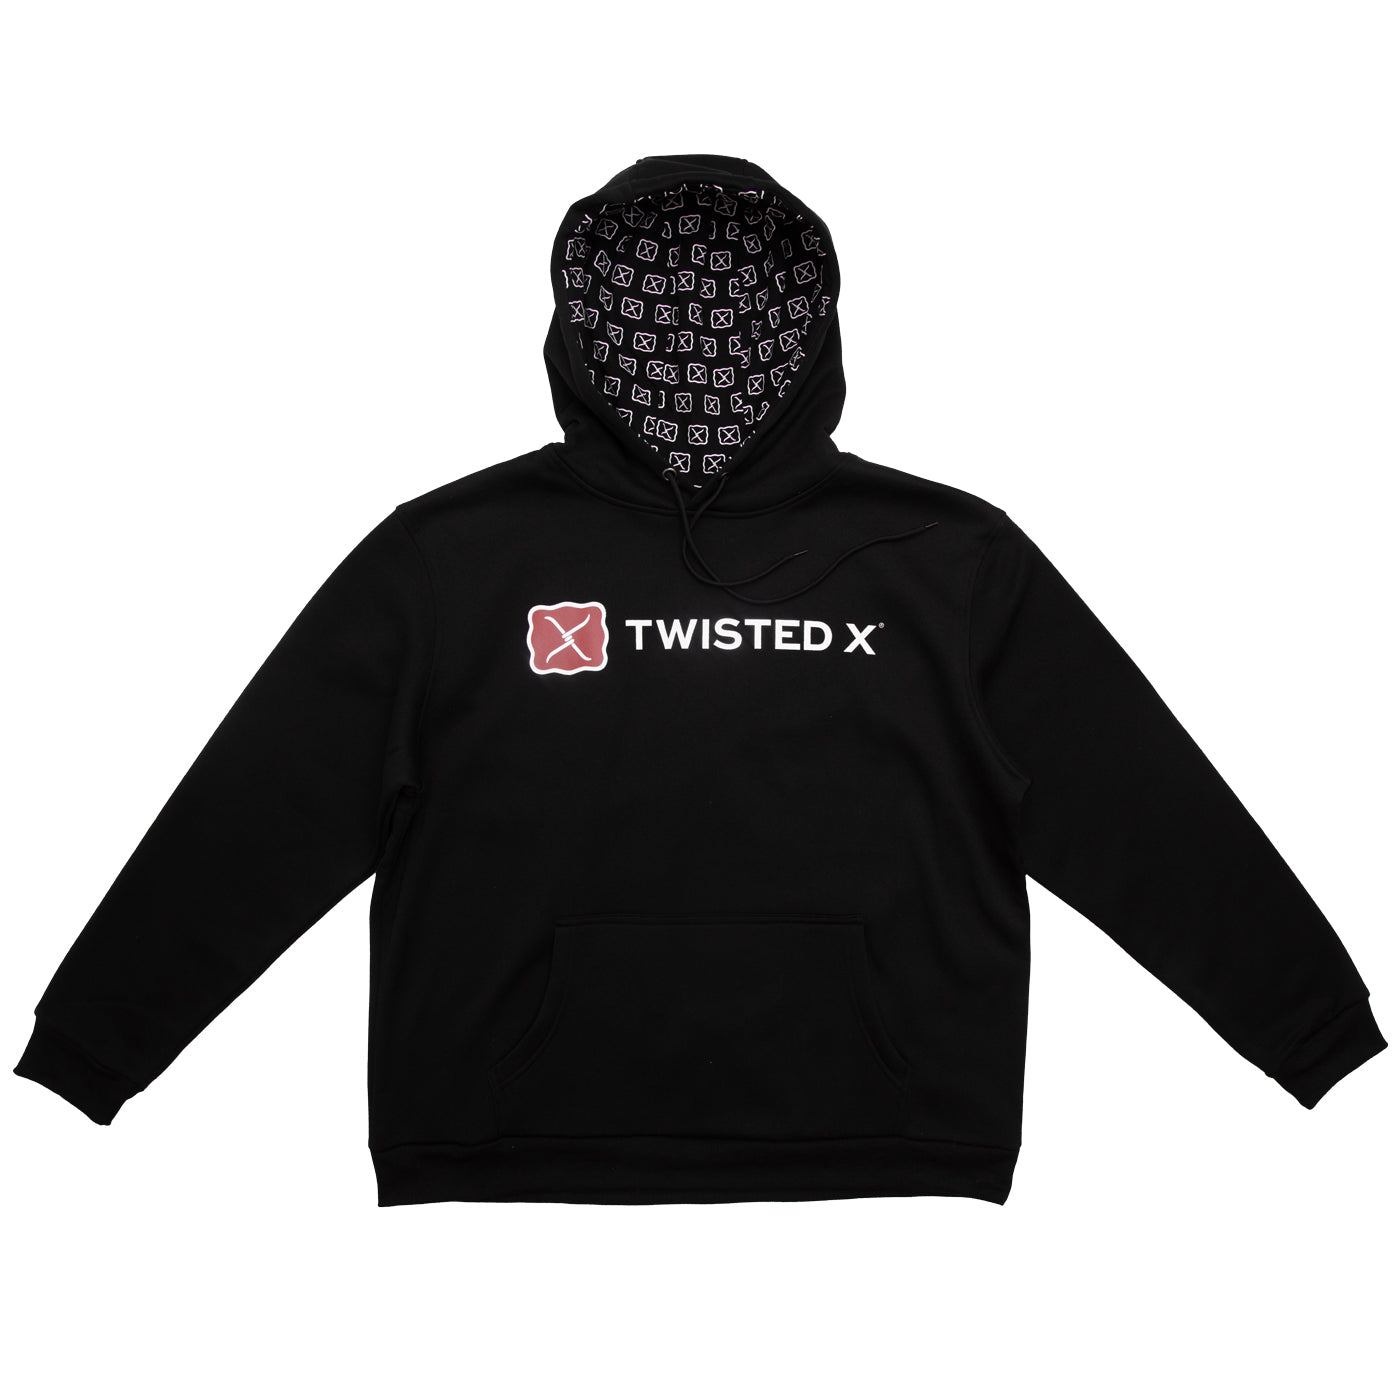 Twisted X Hoodie Sweatshirt  STYLE SWSHIRT002